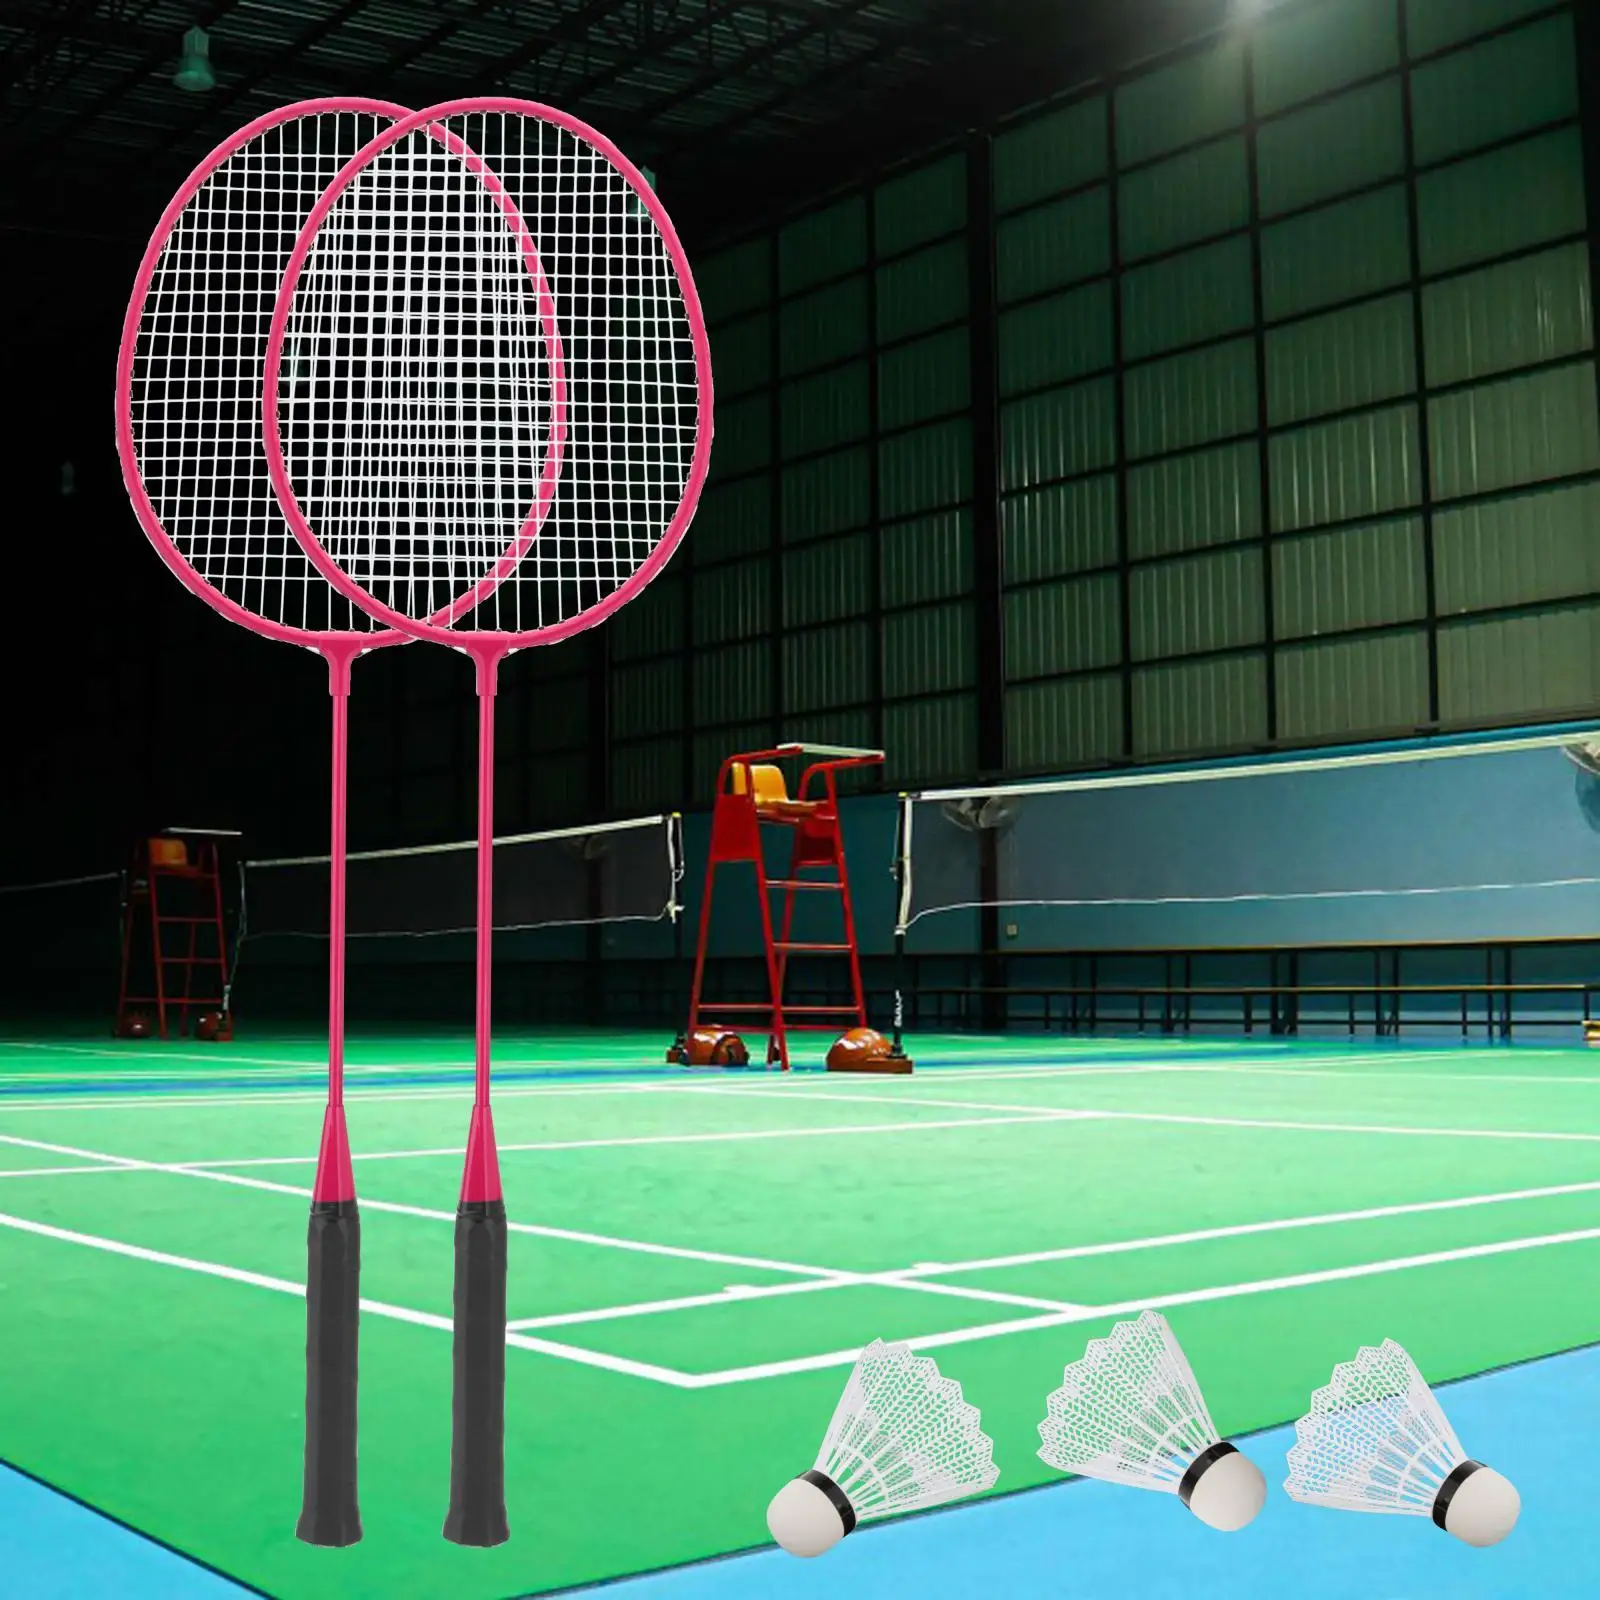 2Pcs Badminton Rackets with 3 Nylon Balls Badminton Equipment Badminton Racquets for Practice Playing Backyard Games Beach Lawn